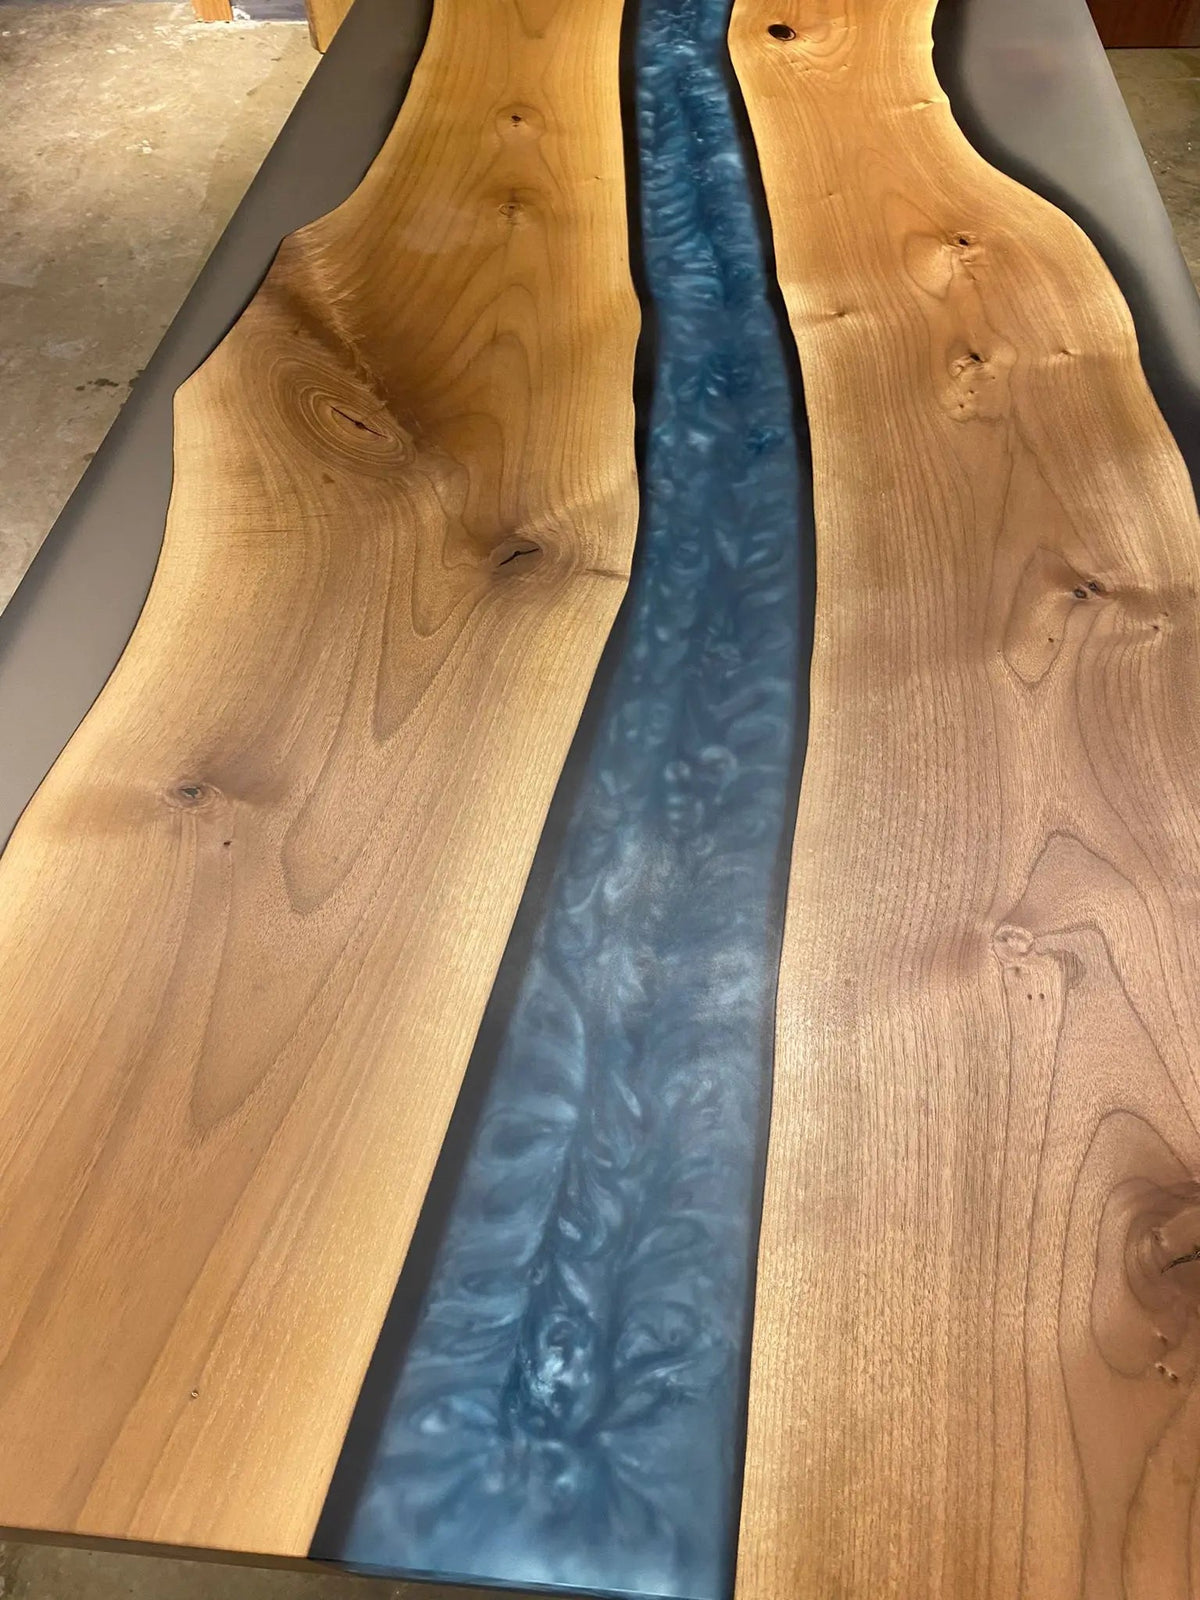 Tuna Walnut River Epoxy Table On Wooden